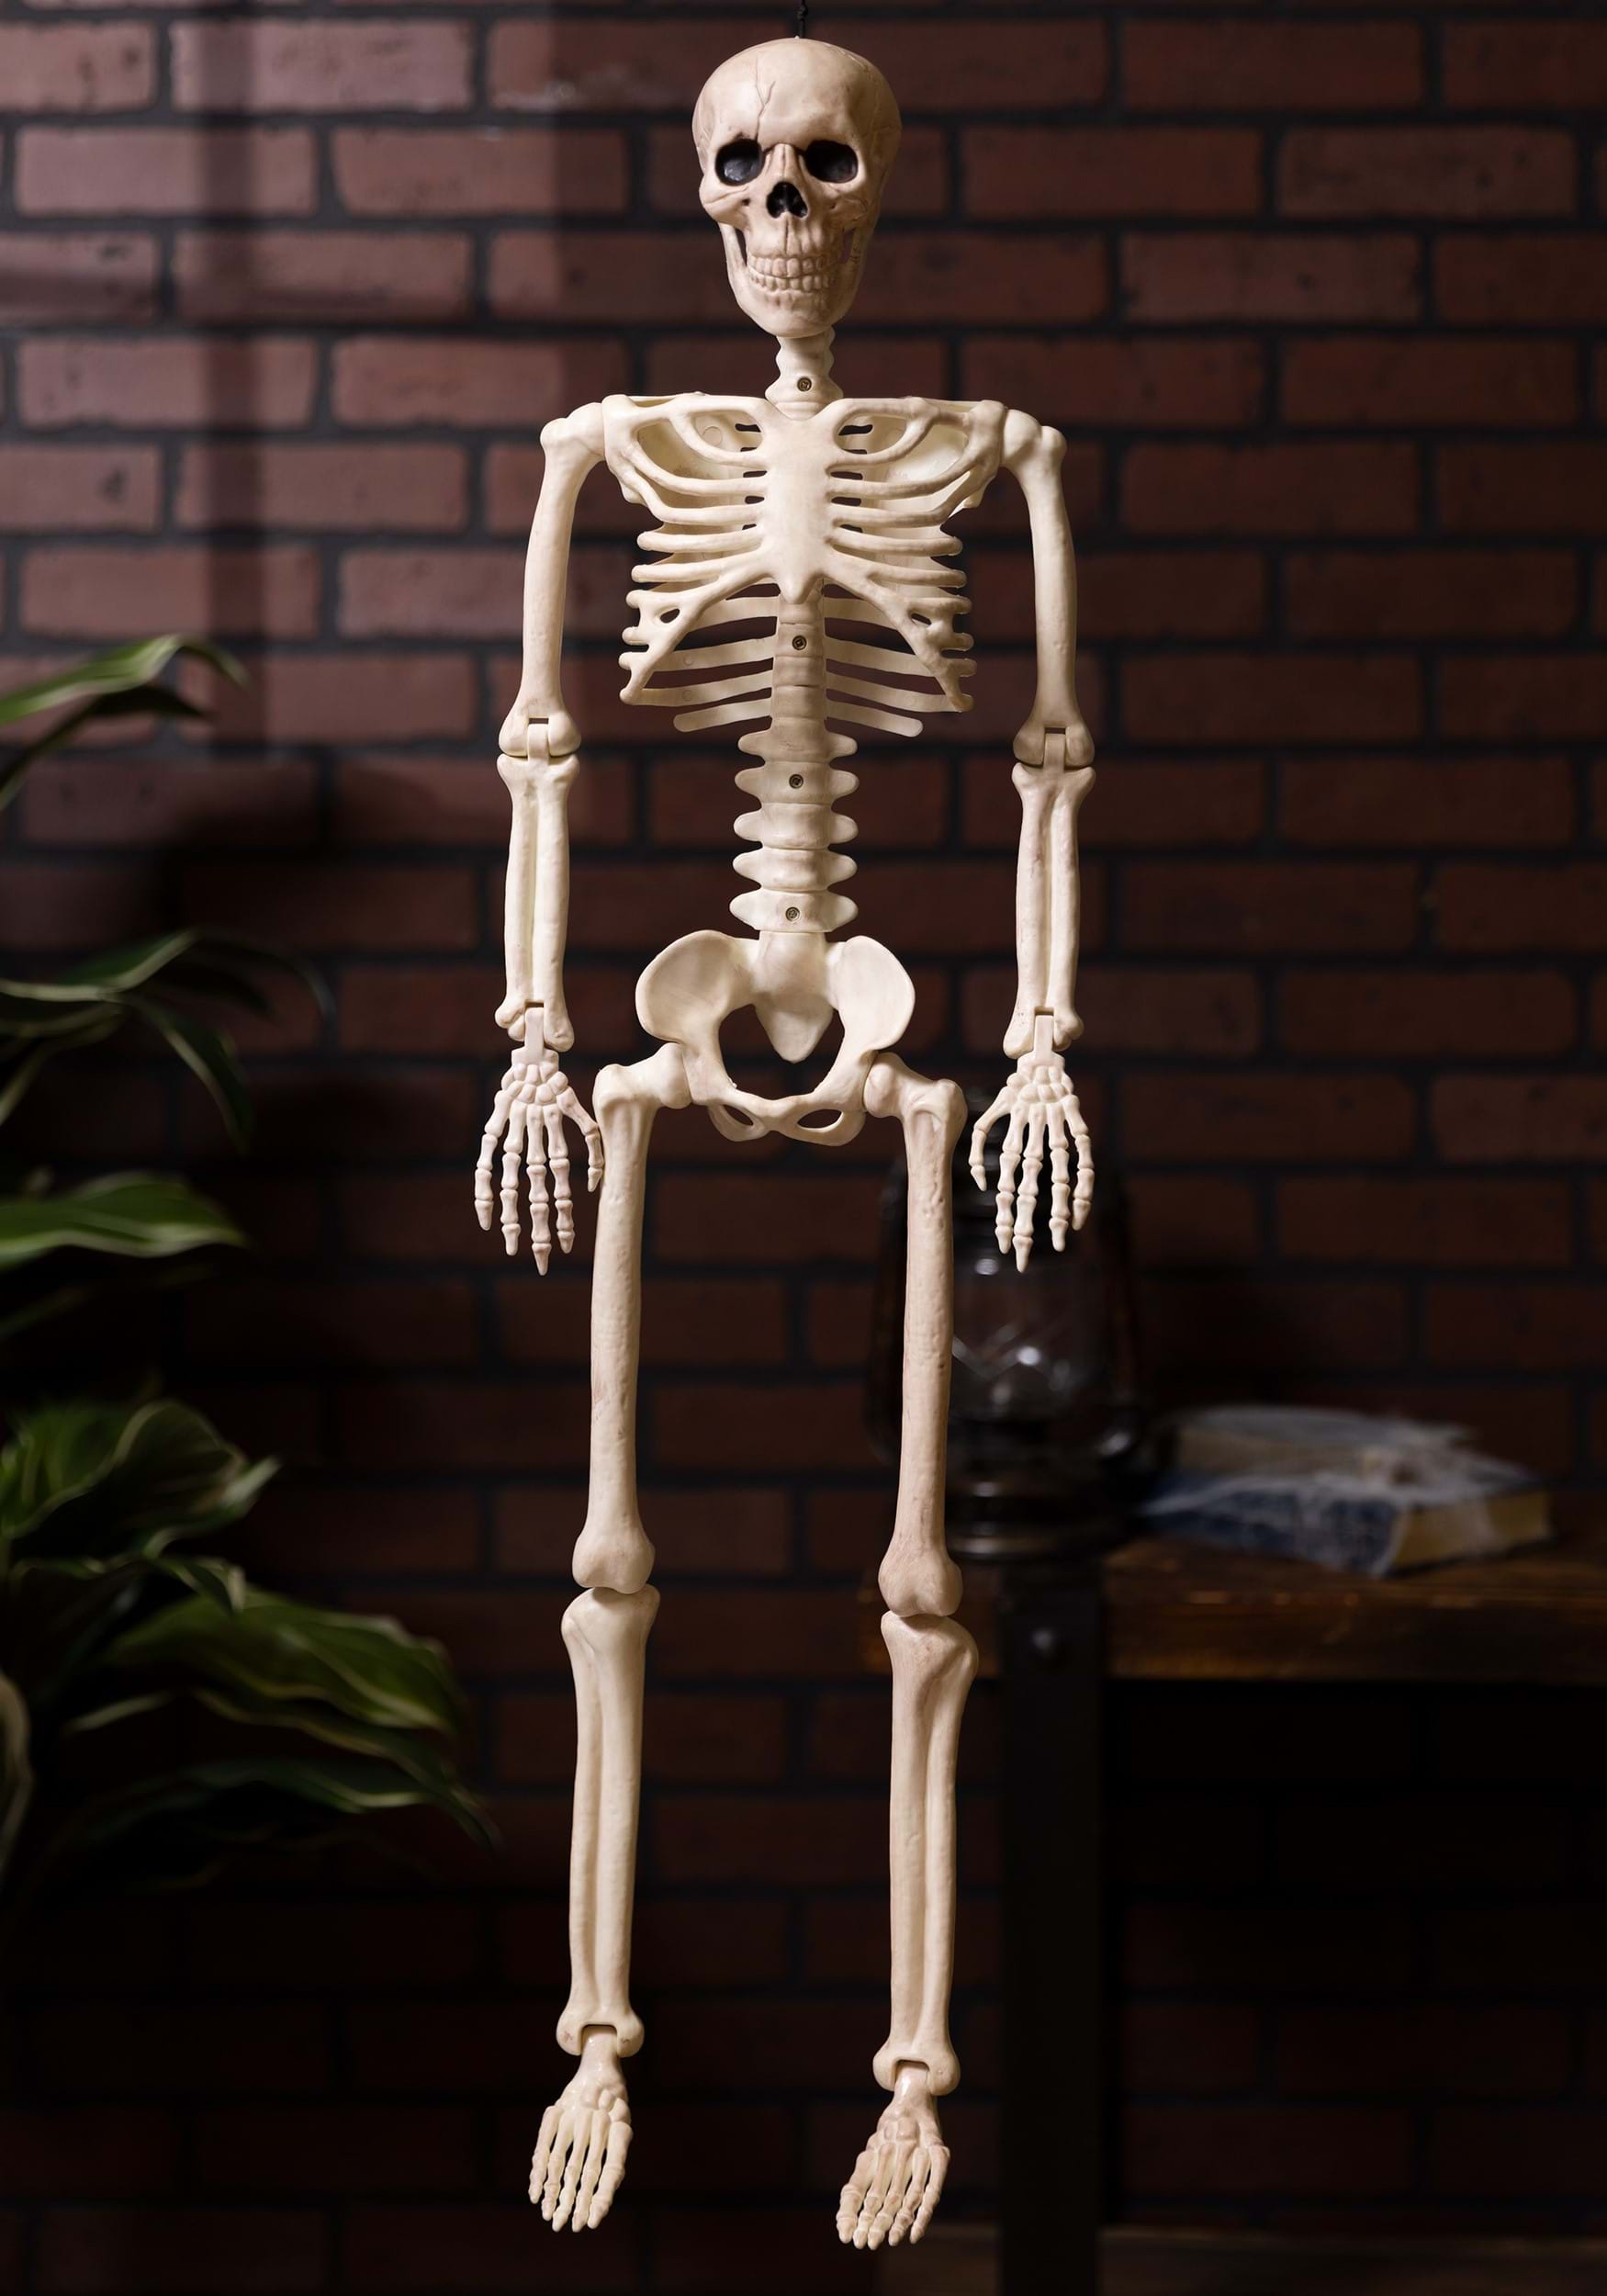 36-Inch Posable Skeleton